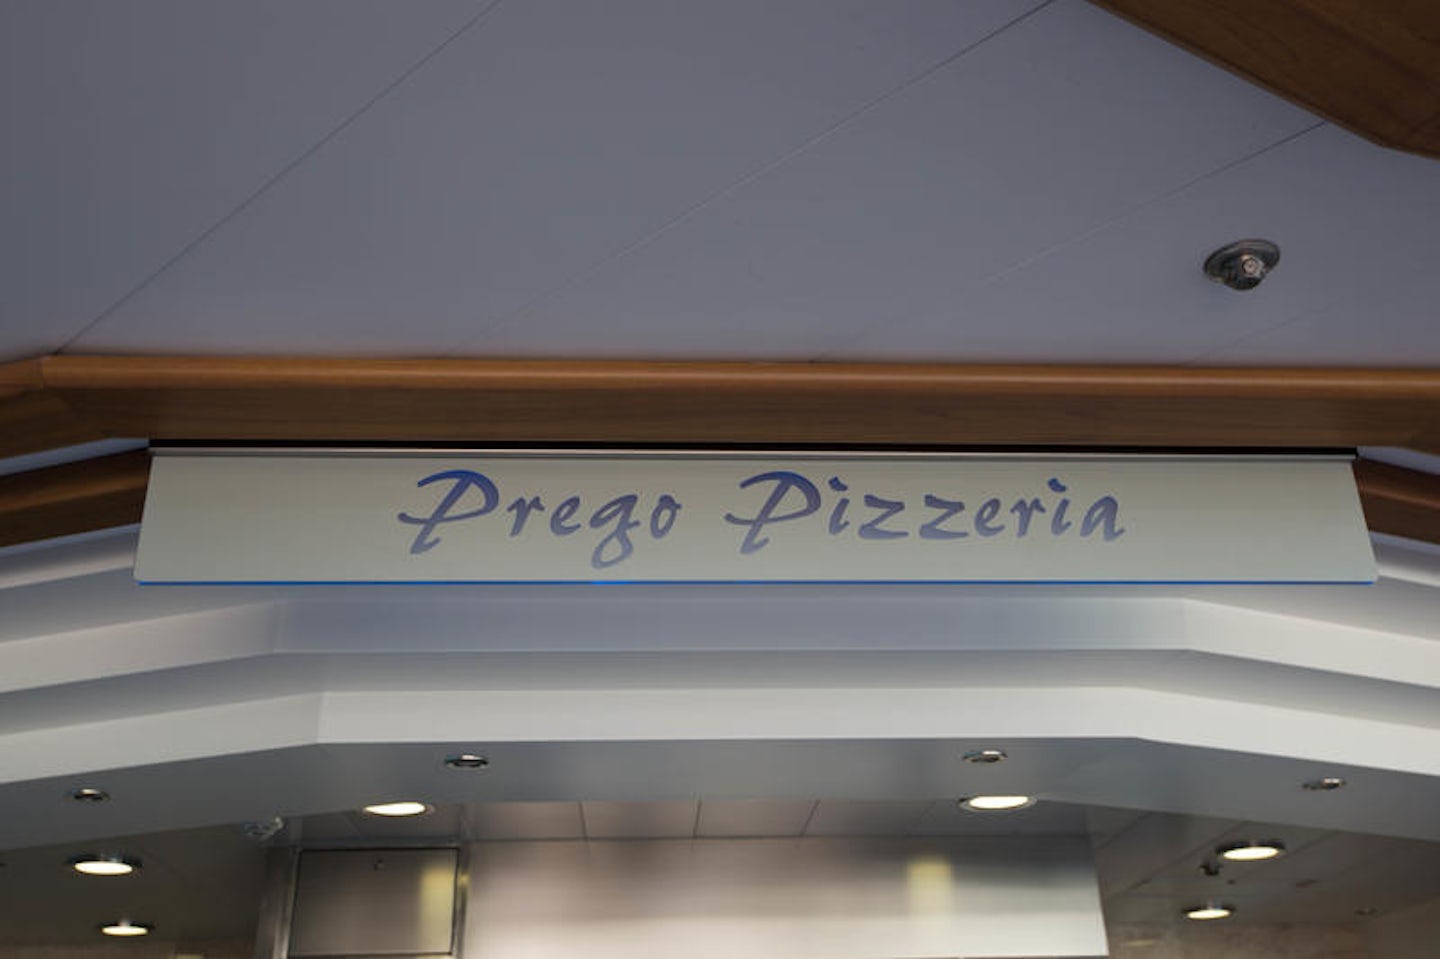 Prego Pizzeria on Regal Princess